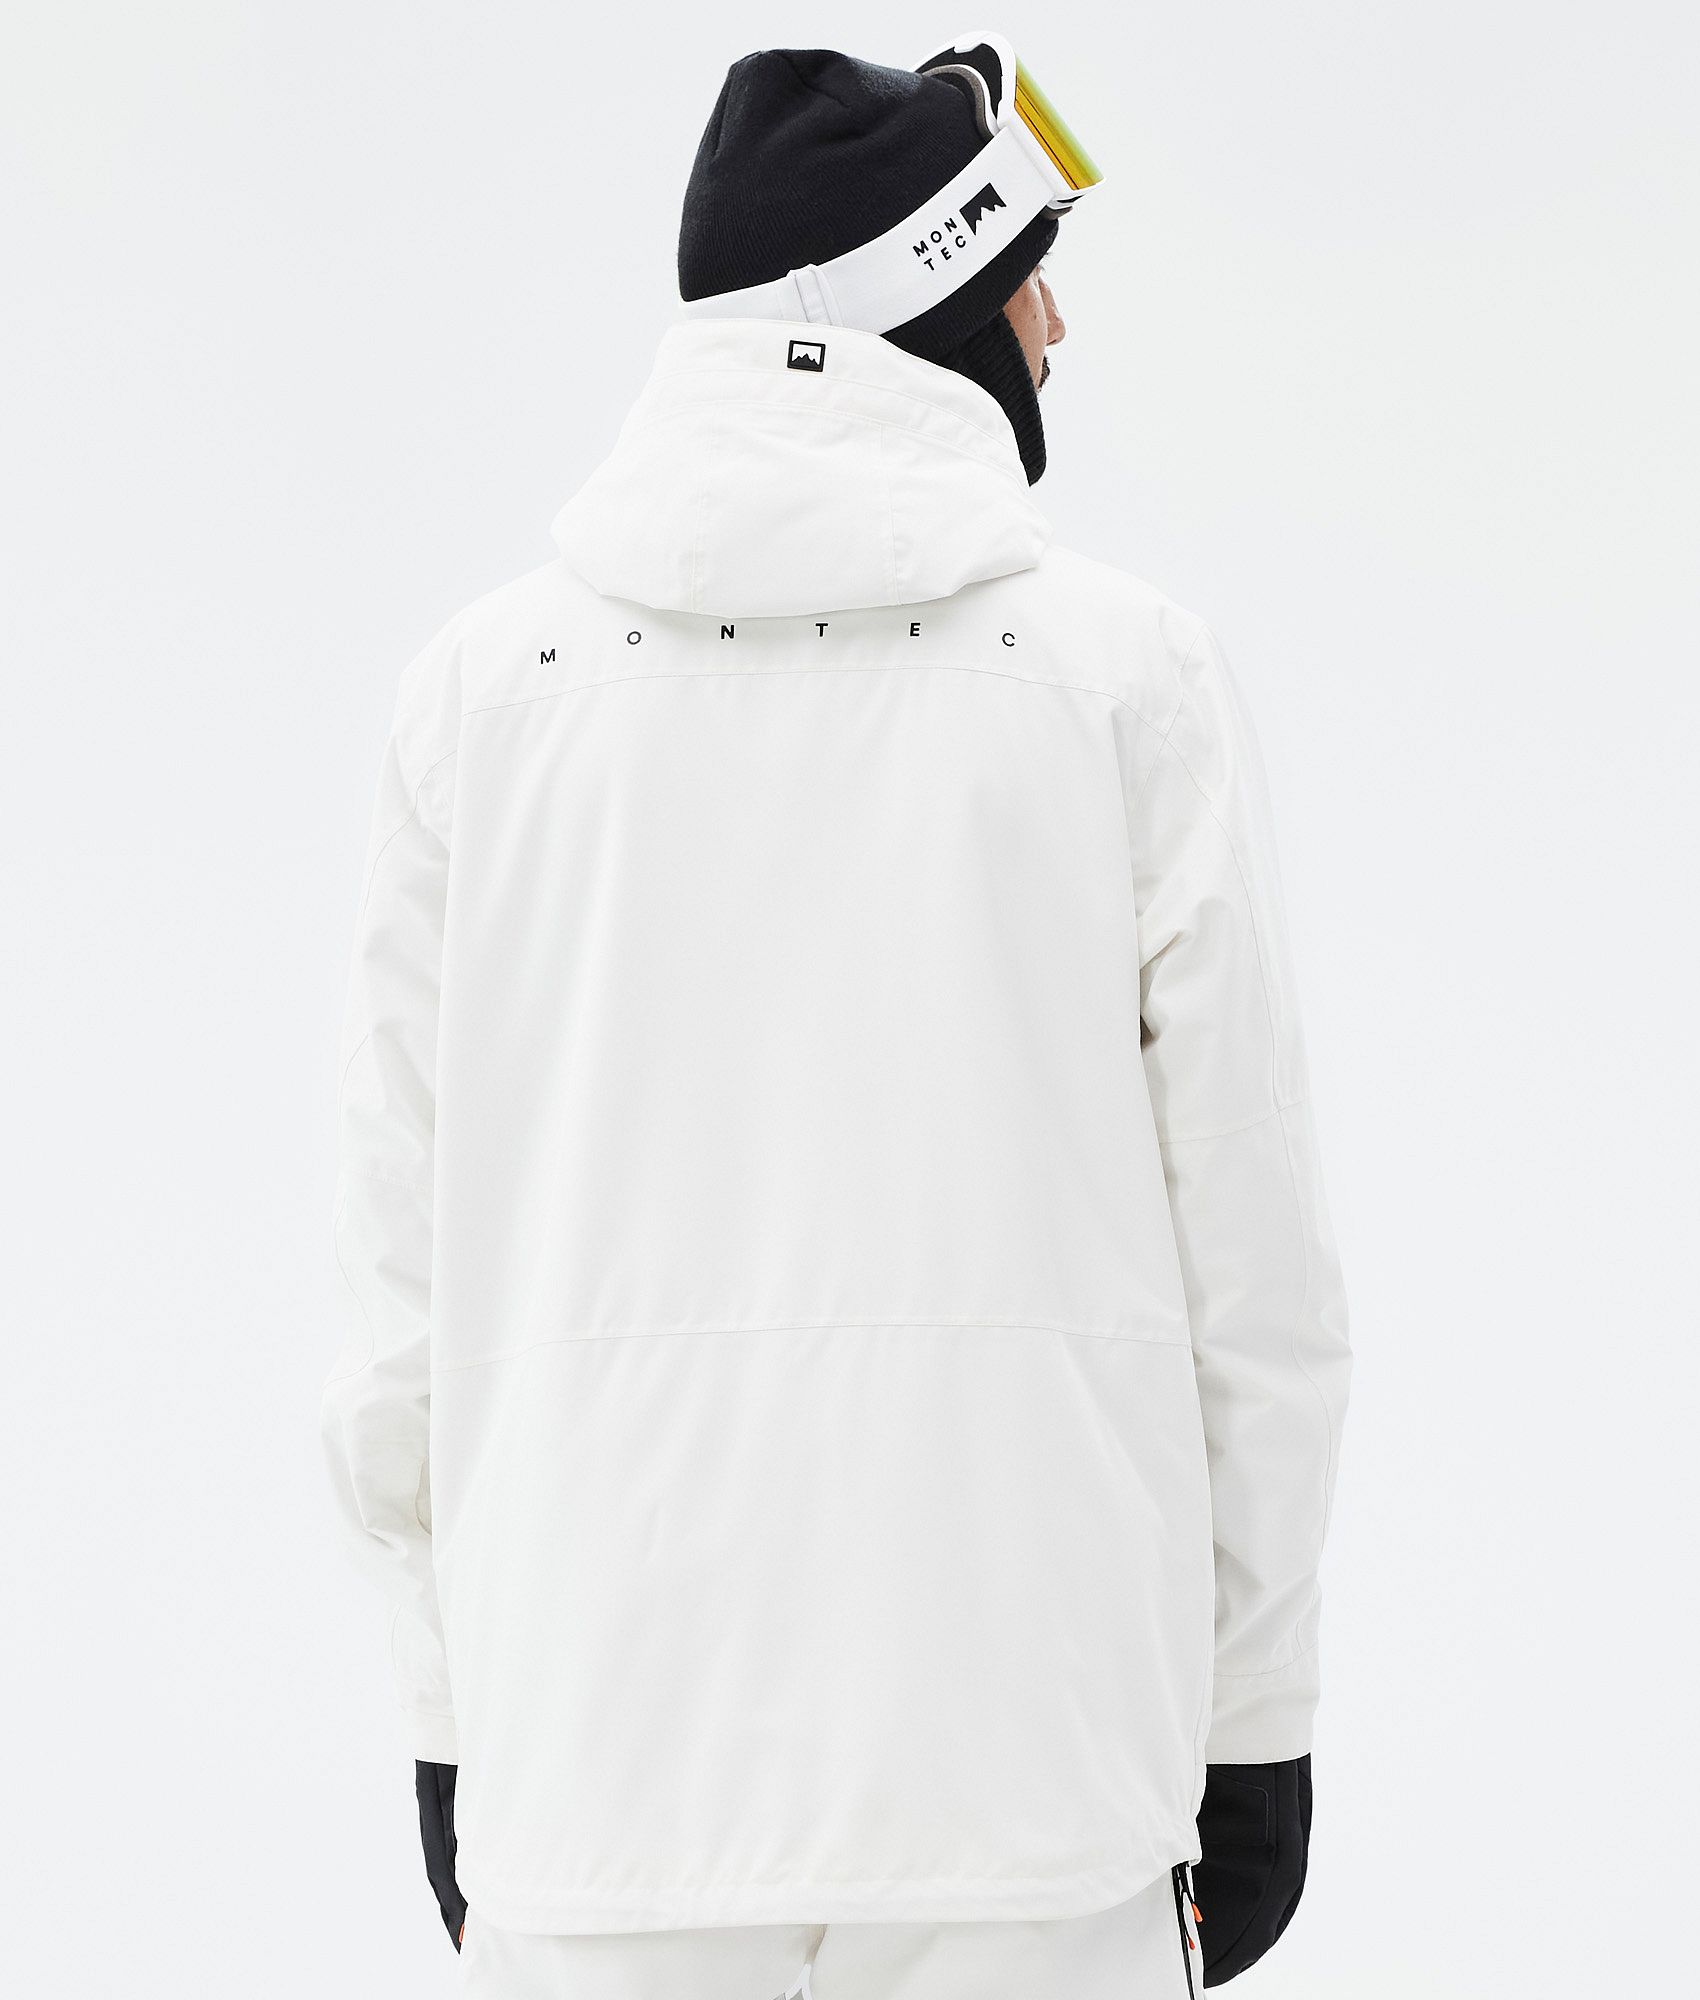 Snow Country Outerwear Men's Big Sizes Peak Snow Jacket - 2XL to 7XL  Insulated Winter Ski Coat